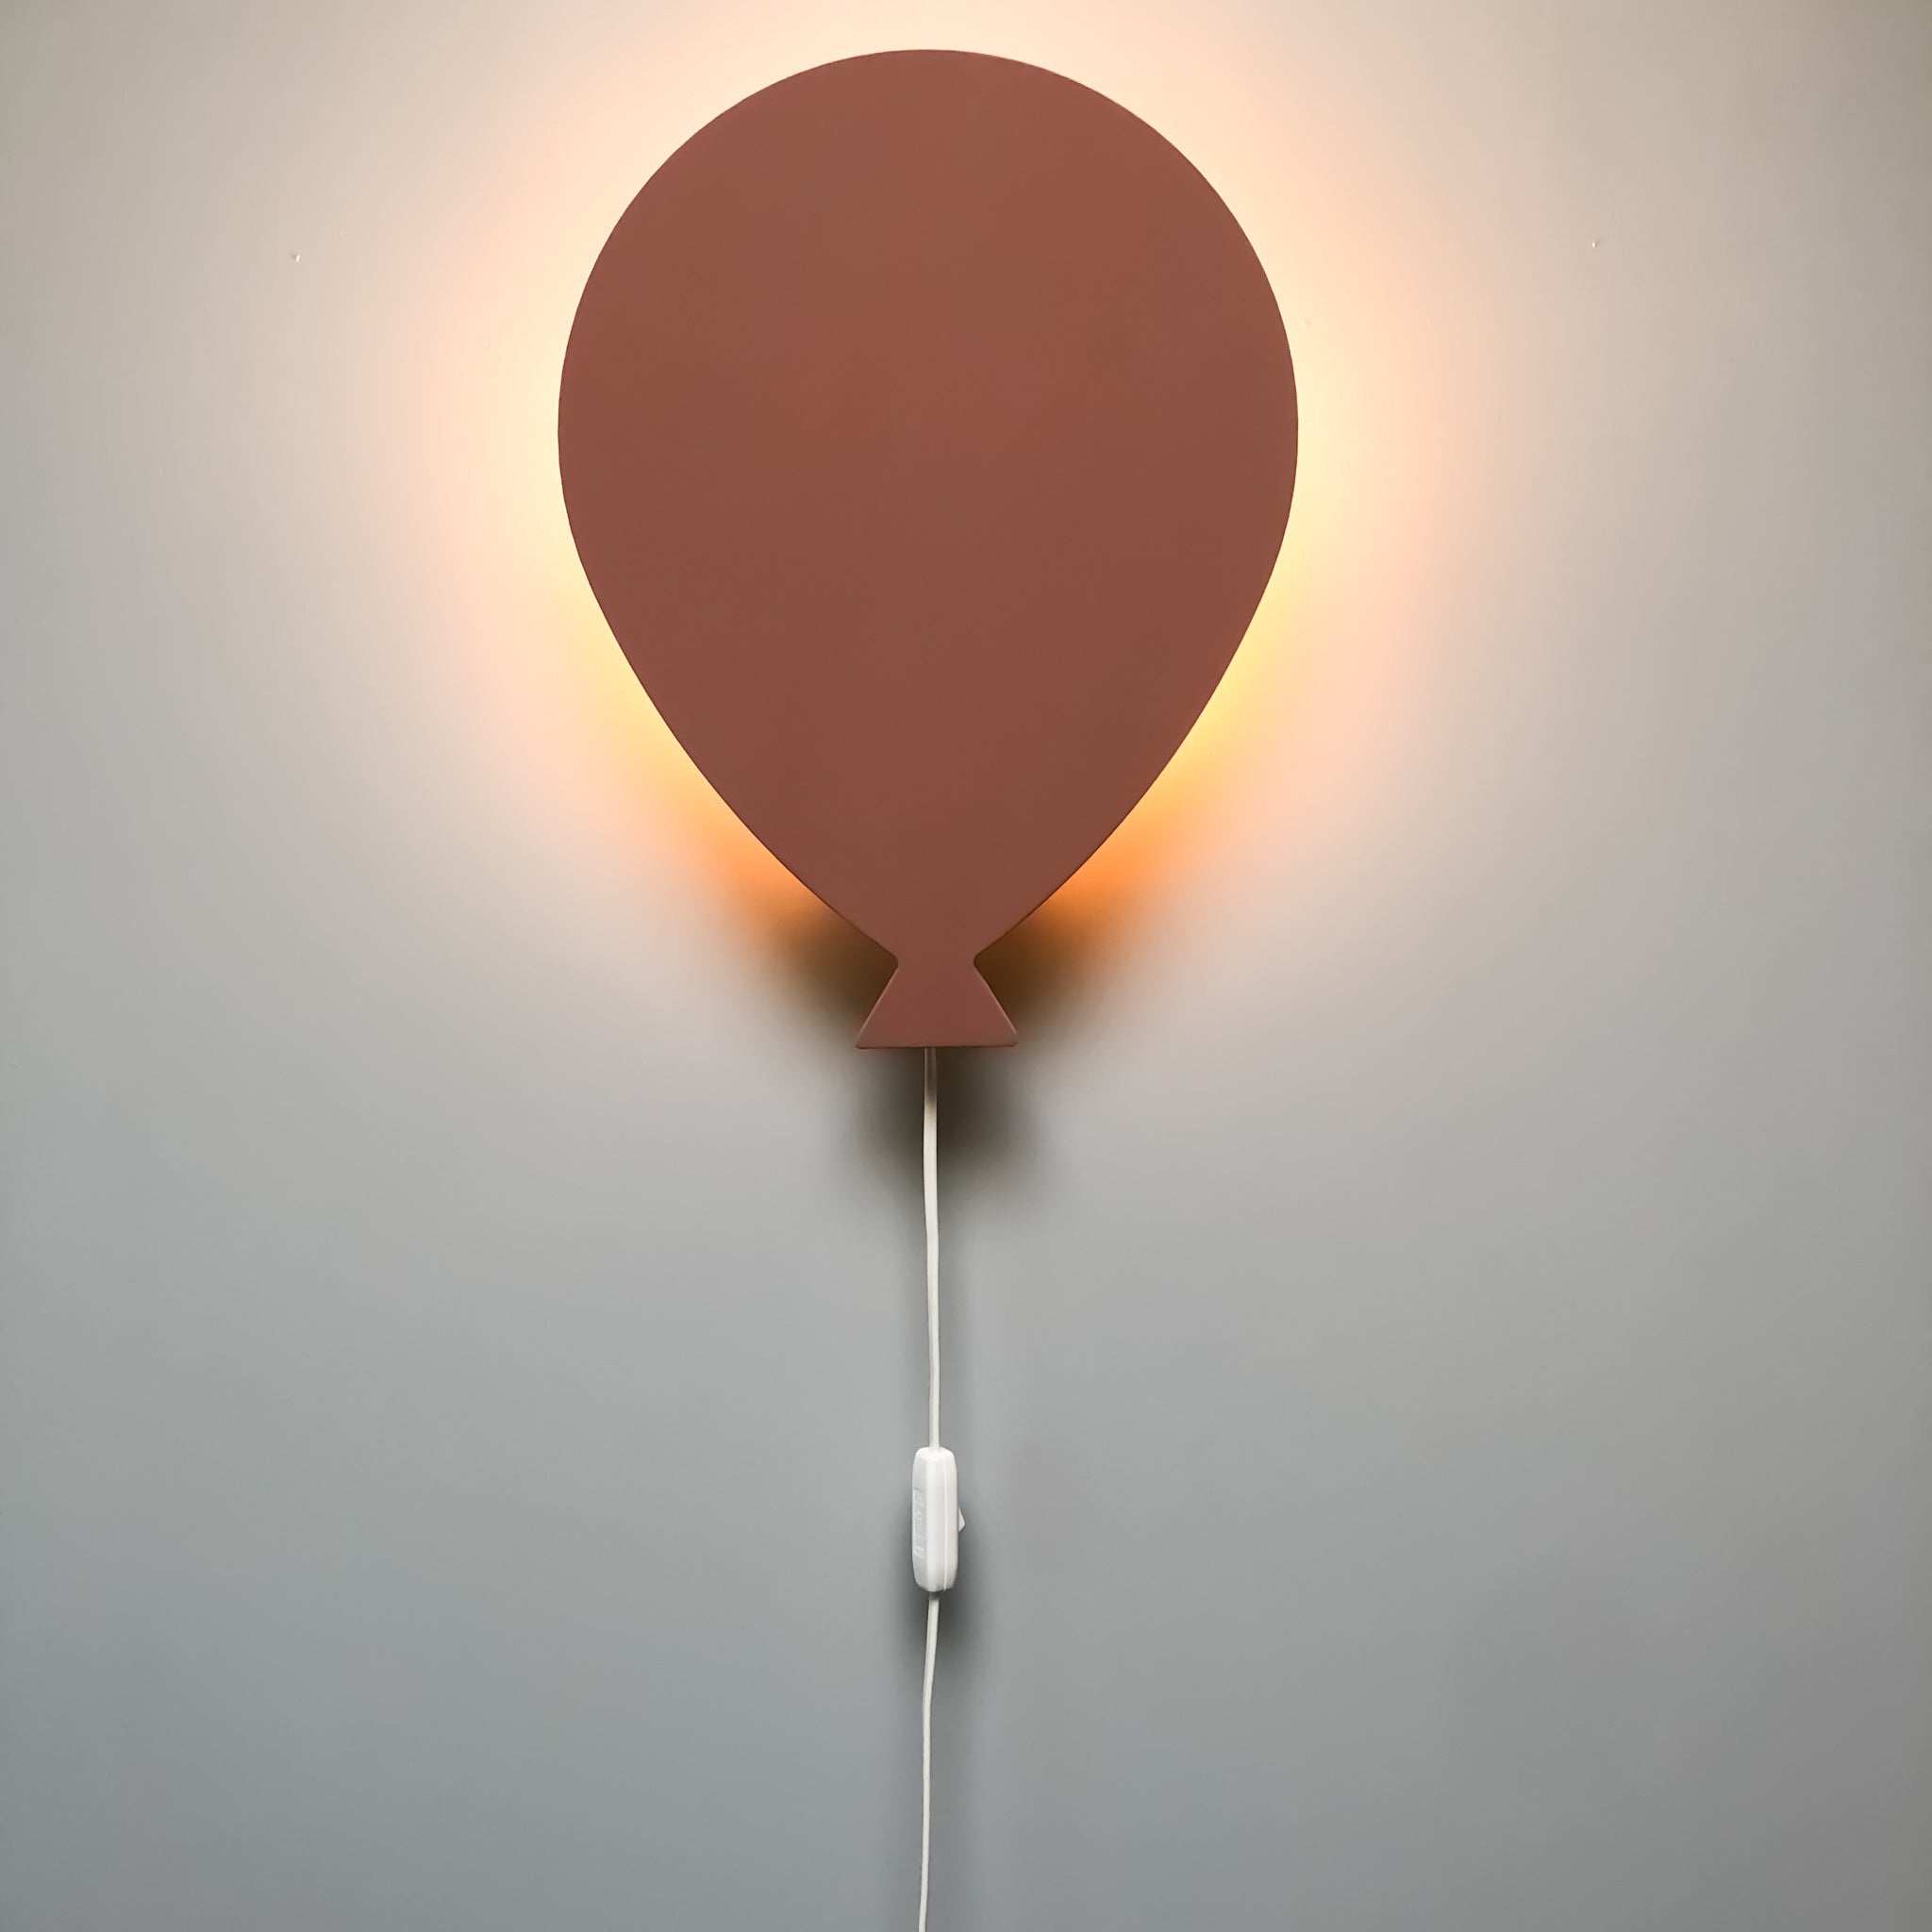 Houten wandlamp kinderkamer | Ballon - Terra Roze - toddie.nl